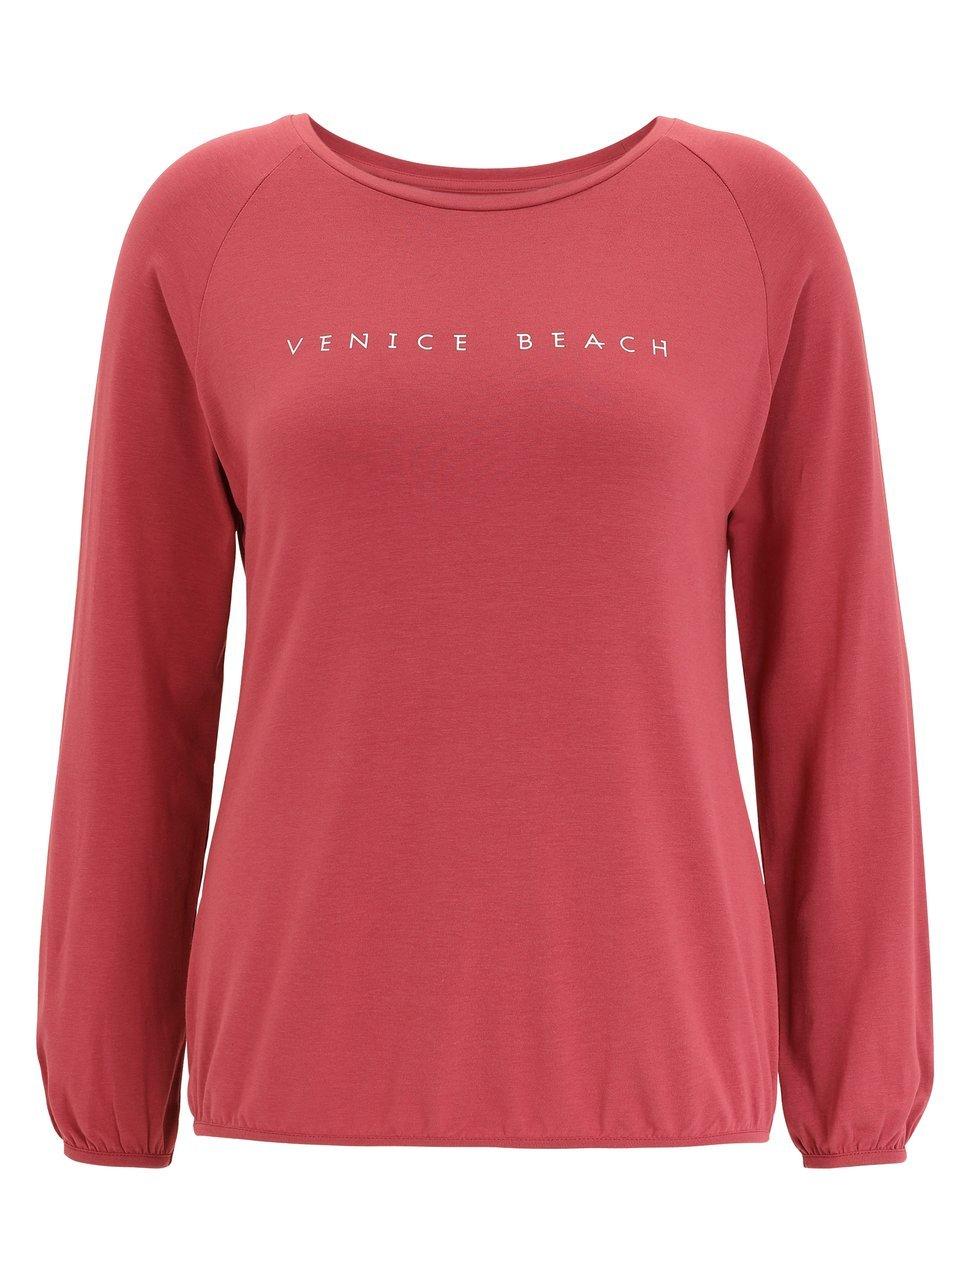 Shirt Van Venice Beach rood